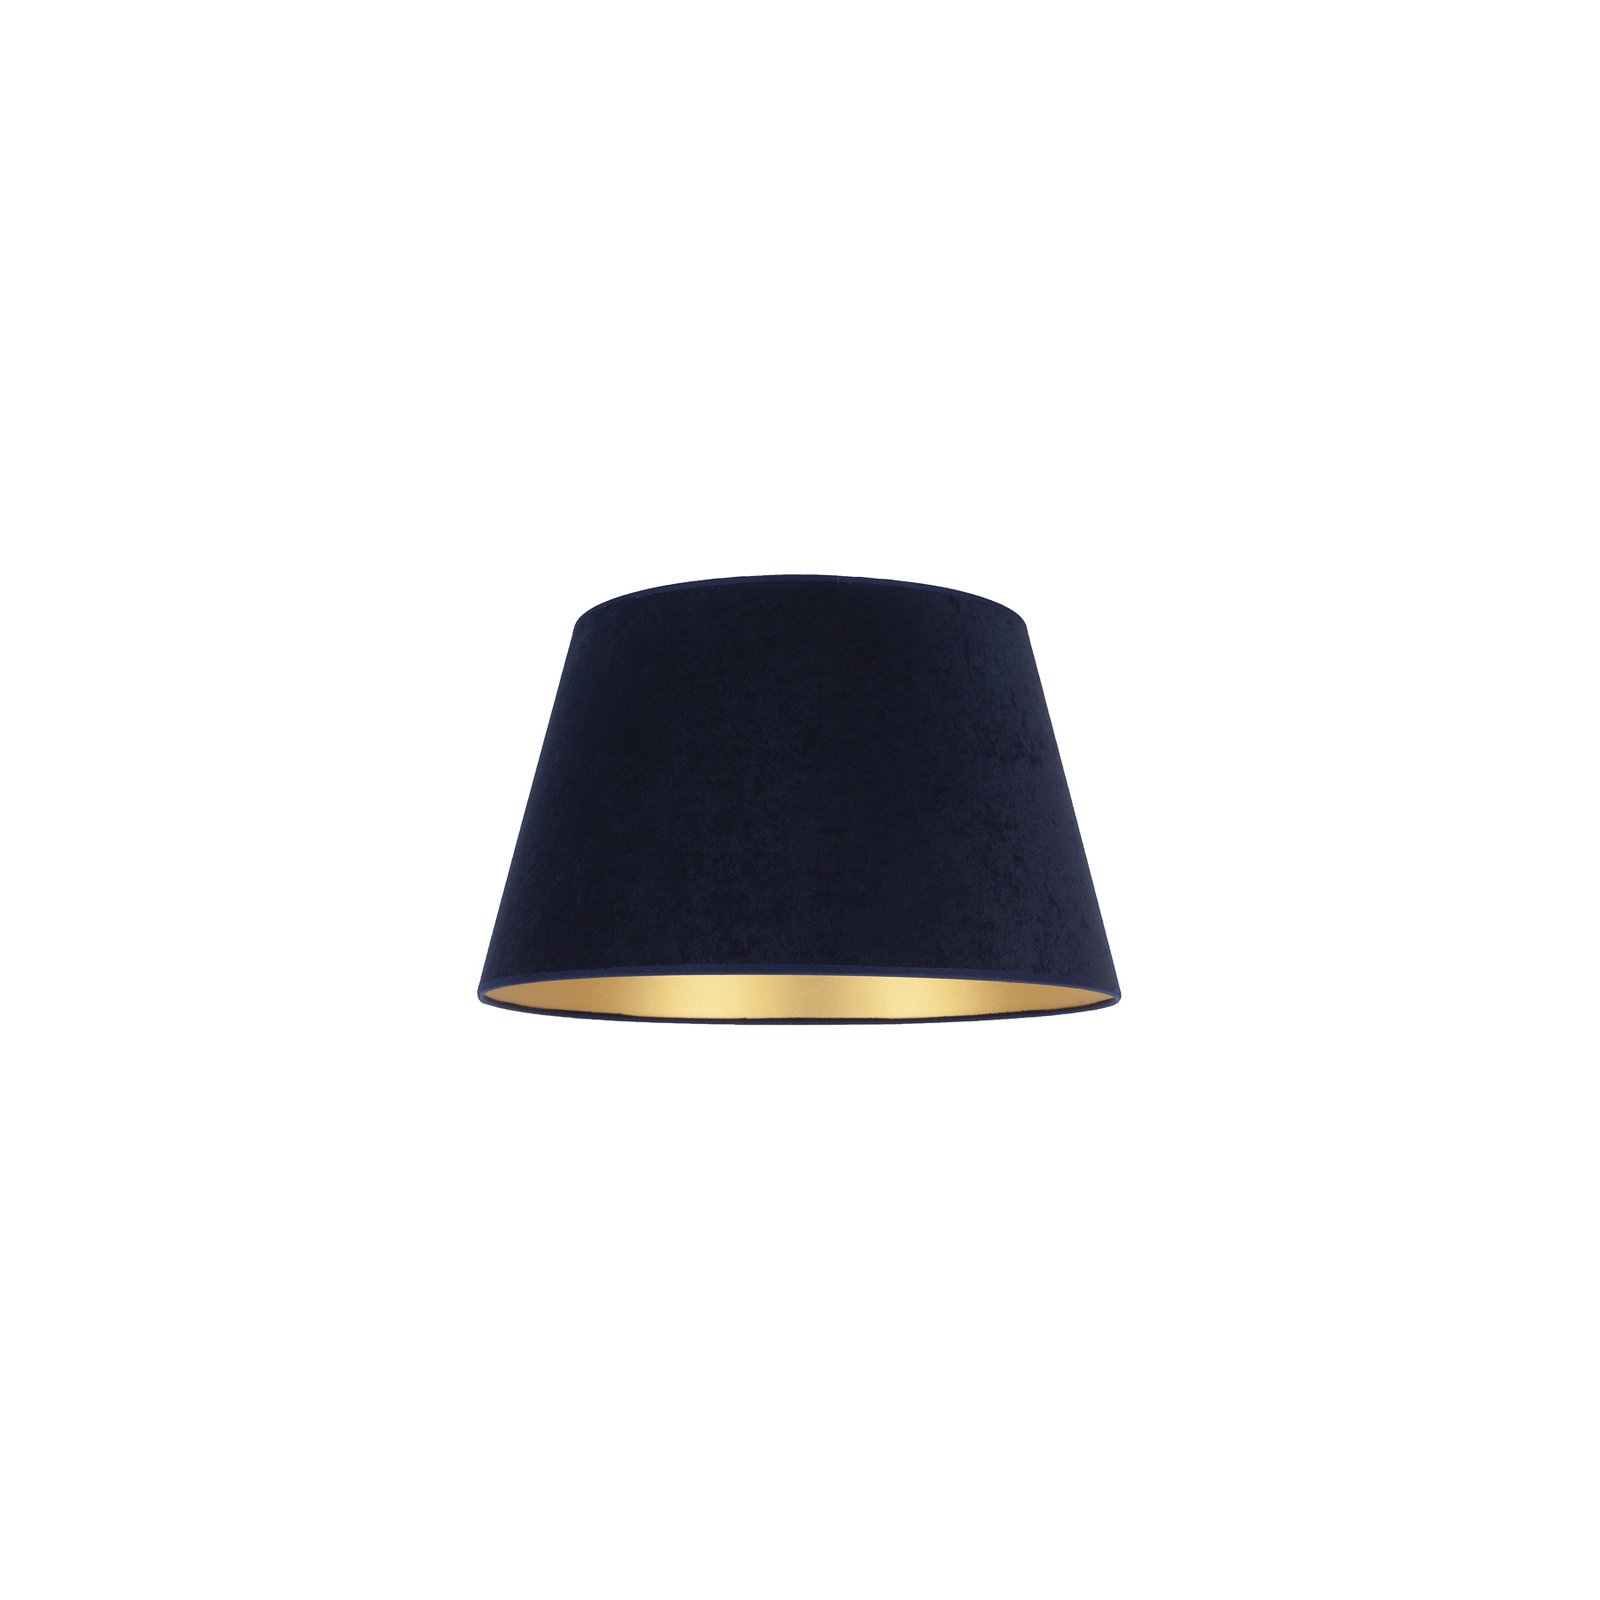 Stínidlo na lampu Cone výška 18 cm, modrá/zlatá